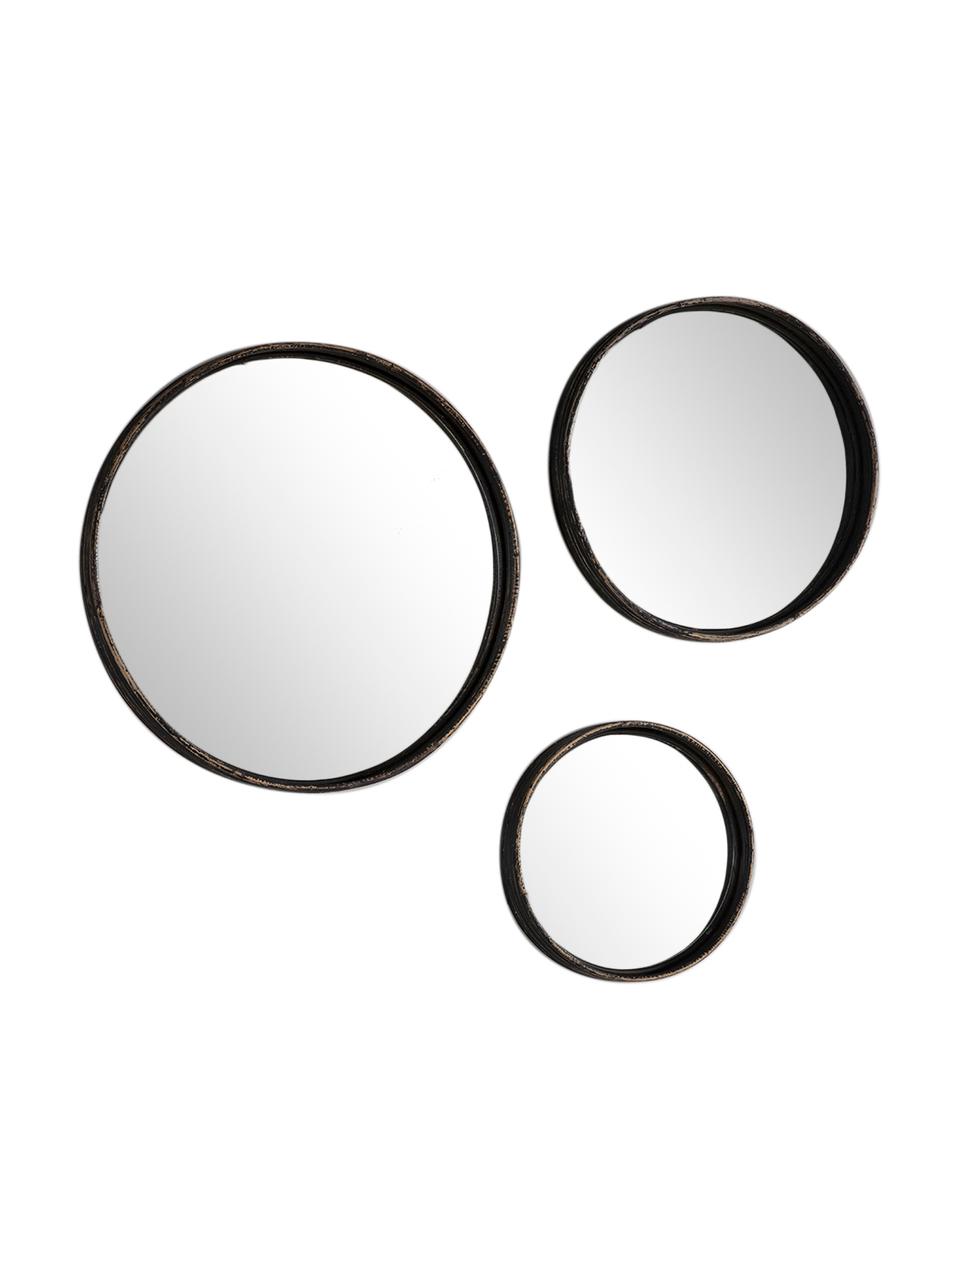 Set de espejos de pared redondos Ricos, 3 pzas., Espejo: cristal, Marrón oscuro, negro, Set de diferentes tamaños